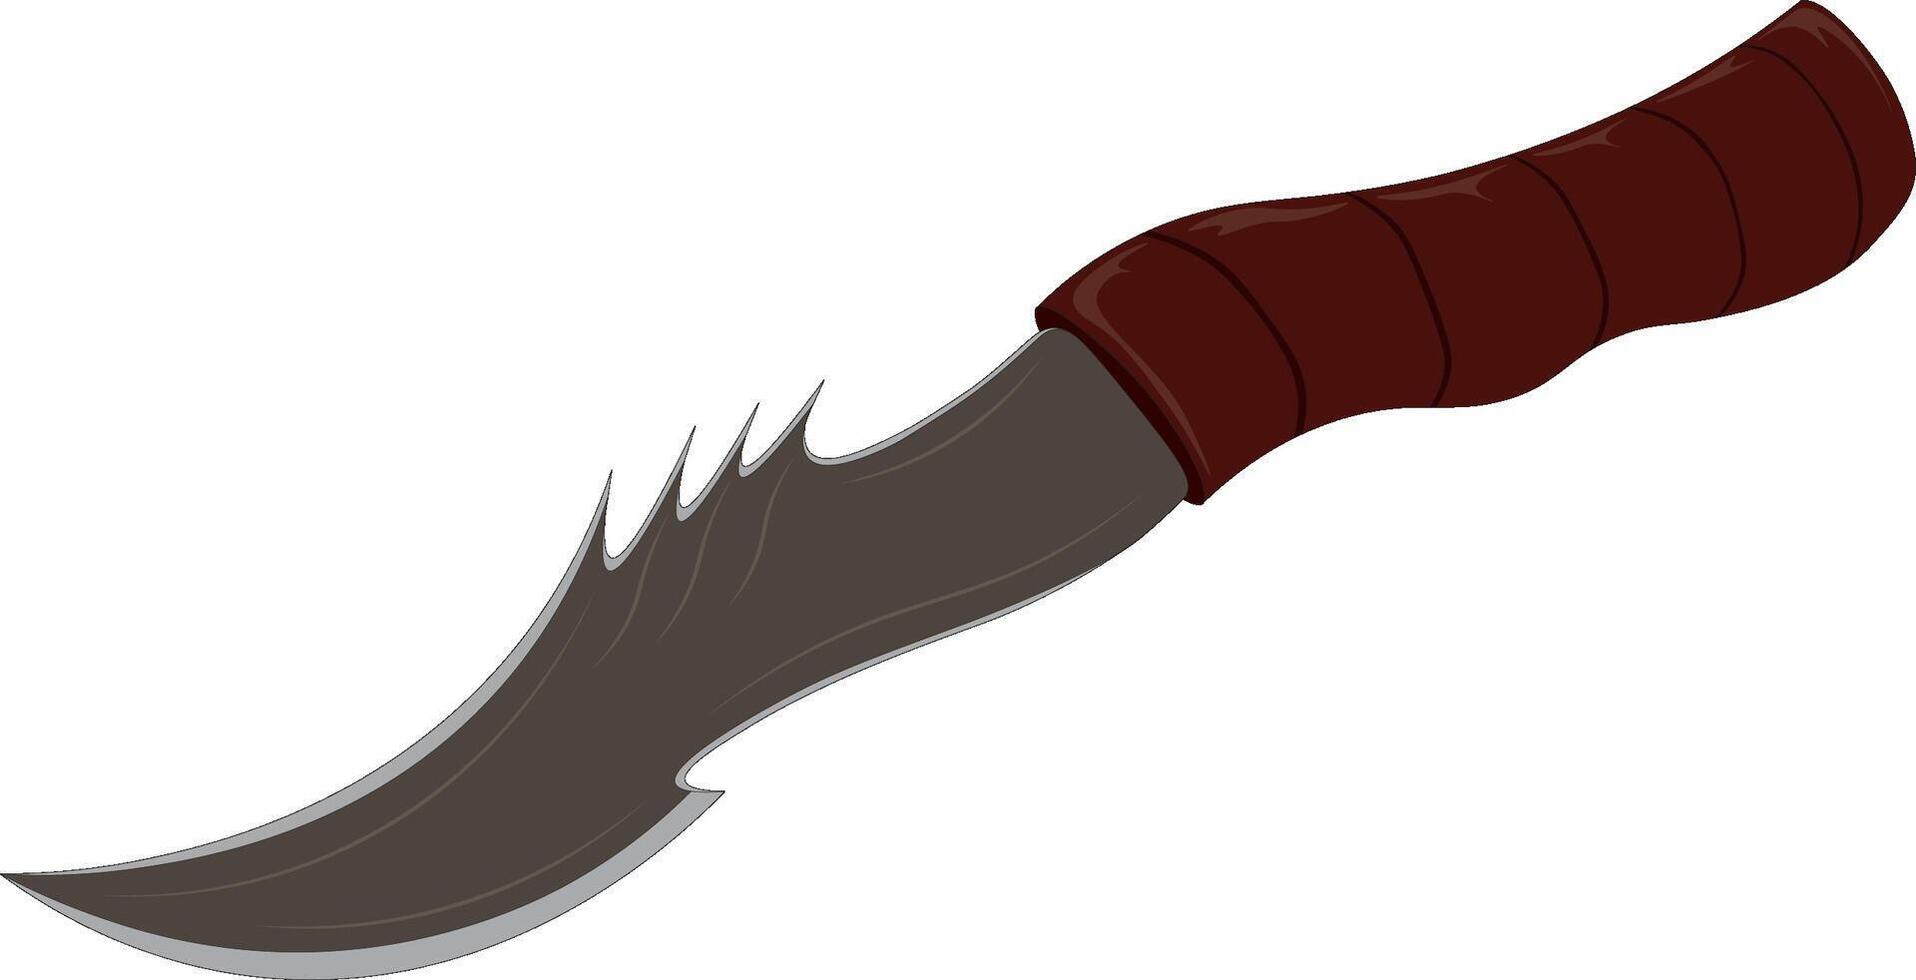 Steel dagger with wavy blade vector illustration